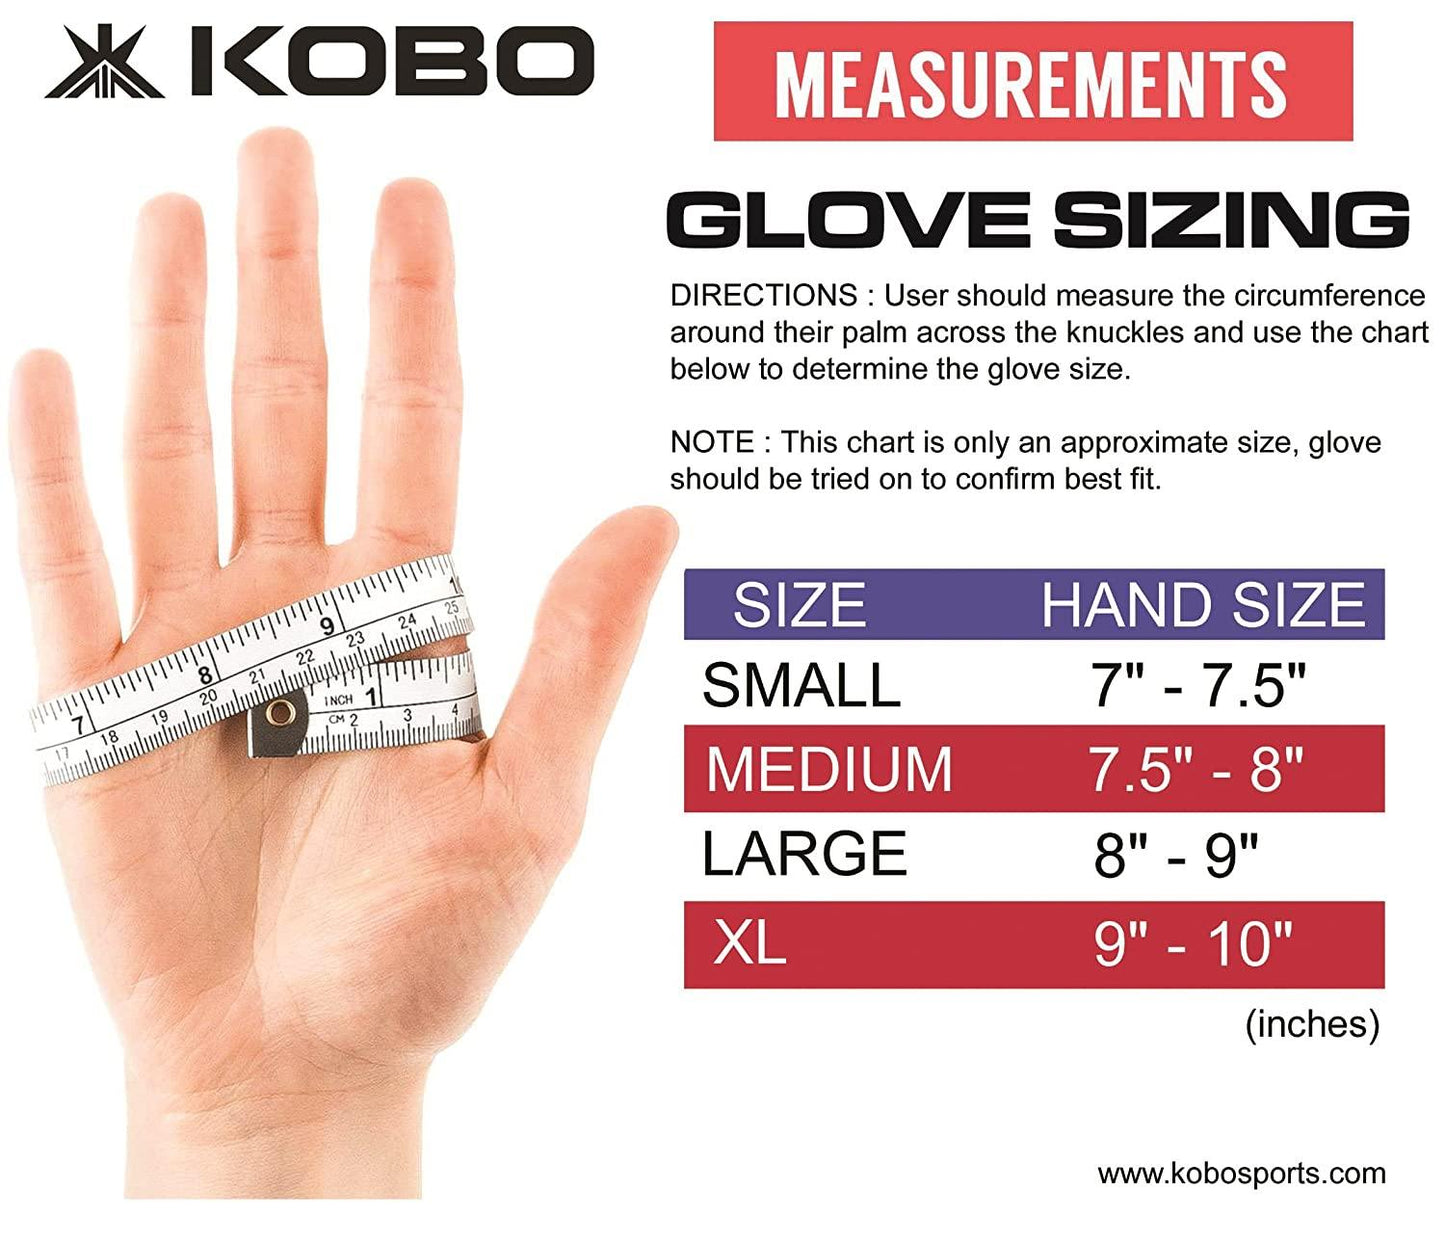 Kobo Leather Fitness Gloves Black - Best Price online Prokicksports.com